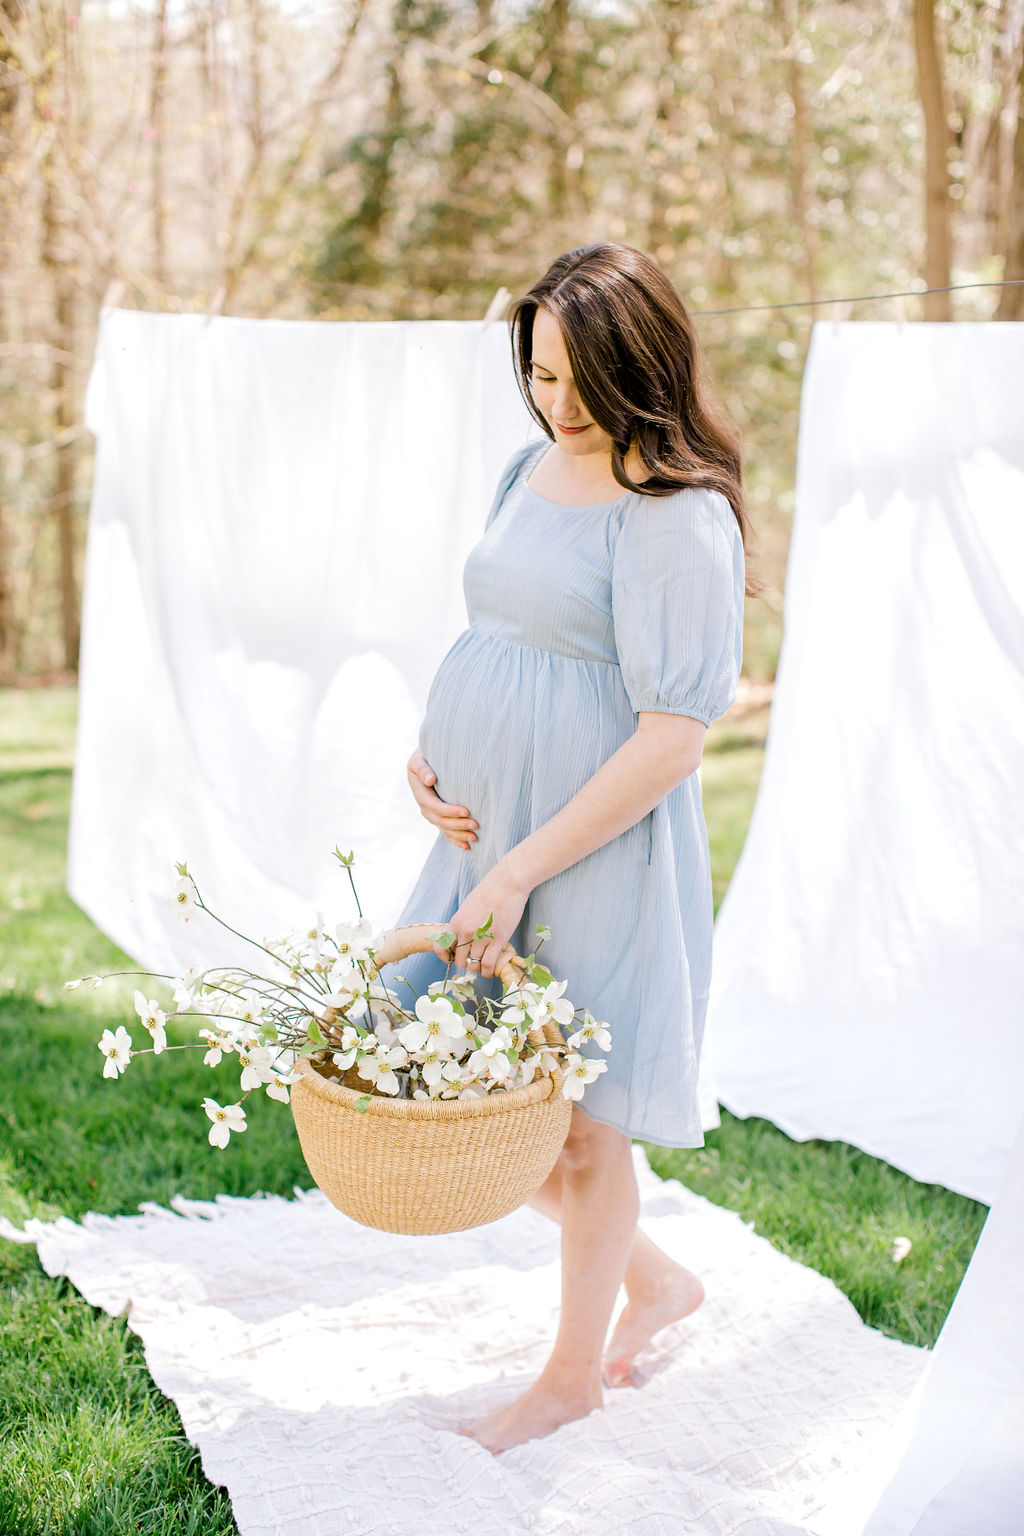 Kara Powers Photography, Backyard Spring Maternity Session, Richmond Newborn Photographer